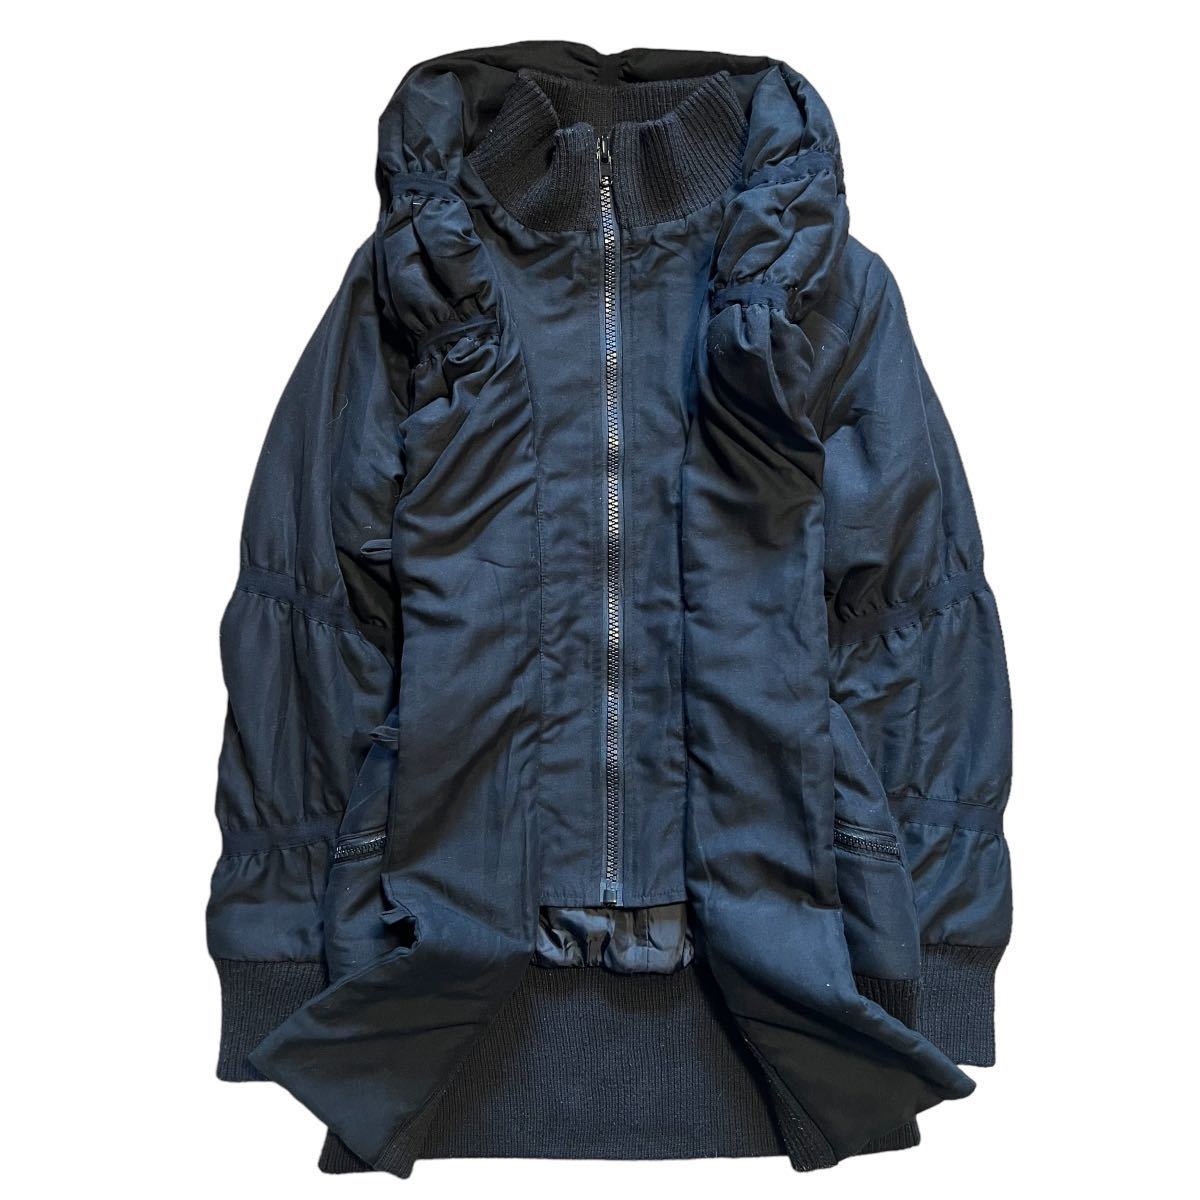 rare japanese label tech design jacket Archive lgb if six was nine Jean Paul gaultier Helmut lang Vivienne Westwood rickowens 90s_画像2